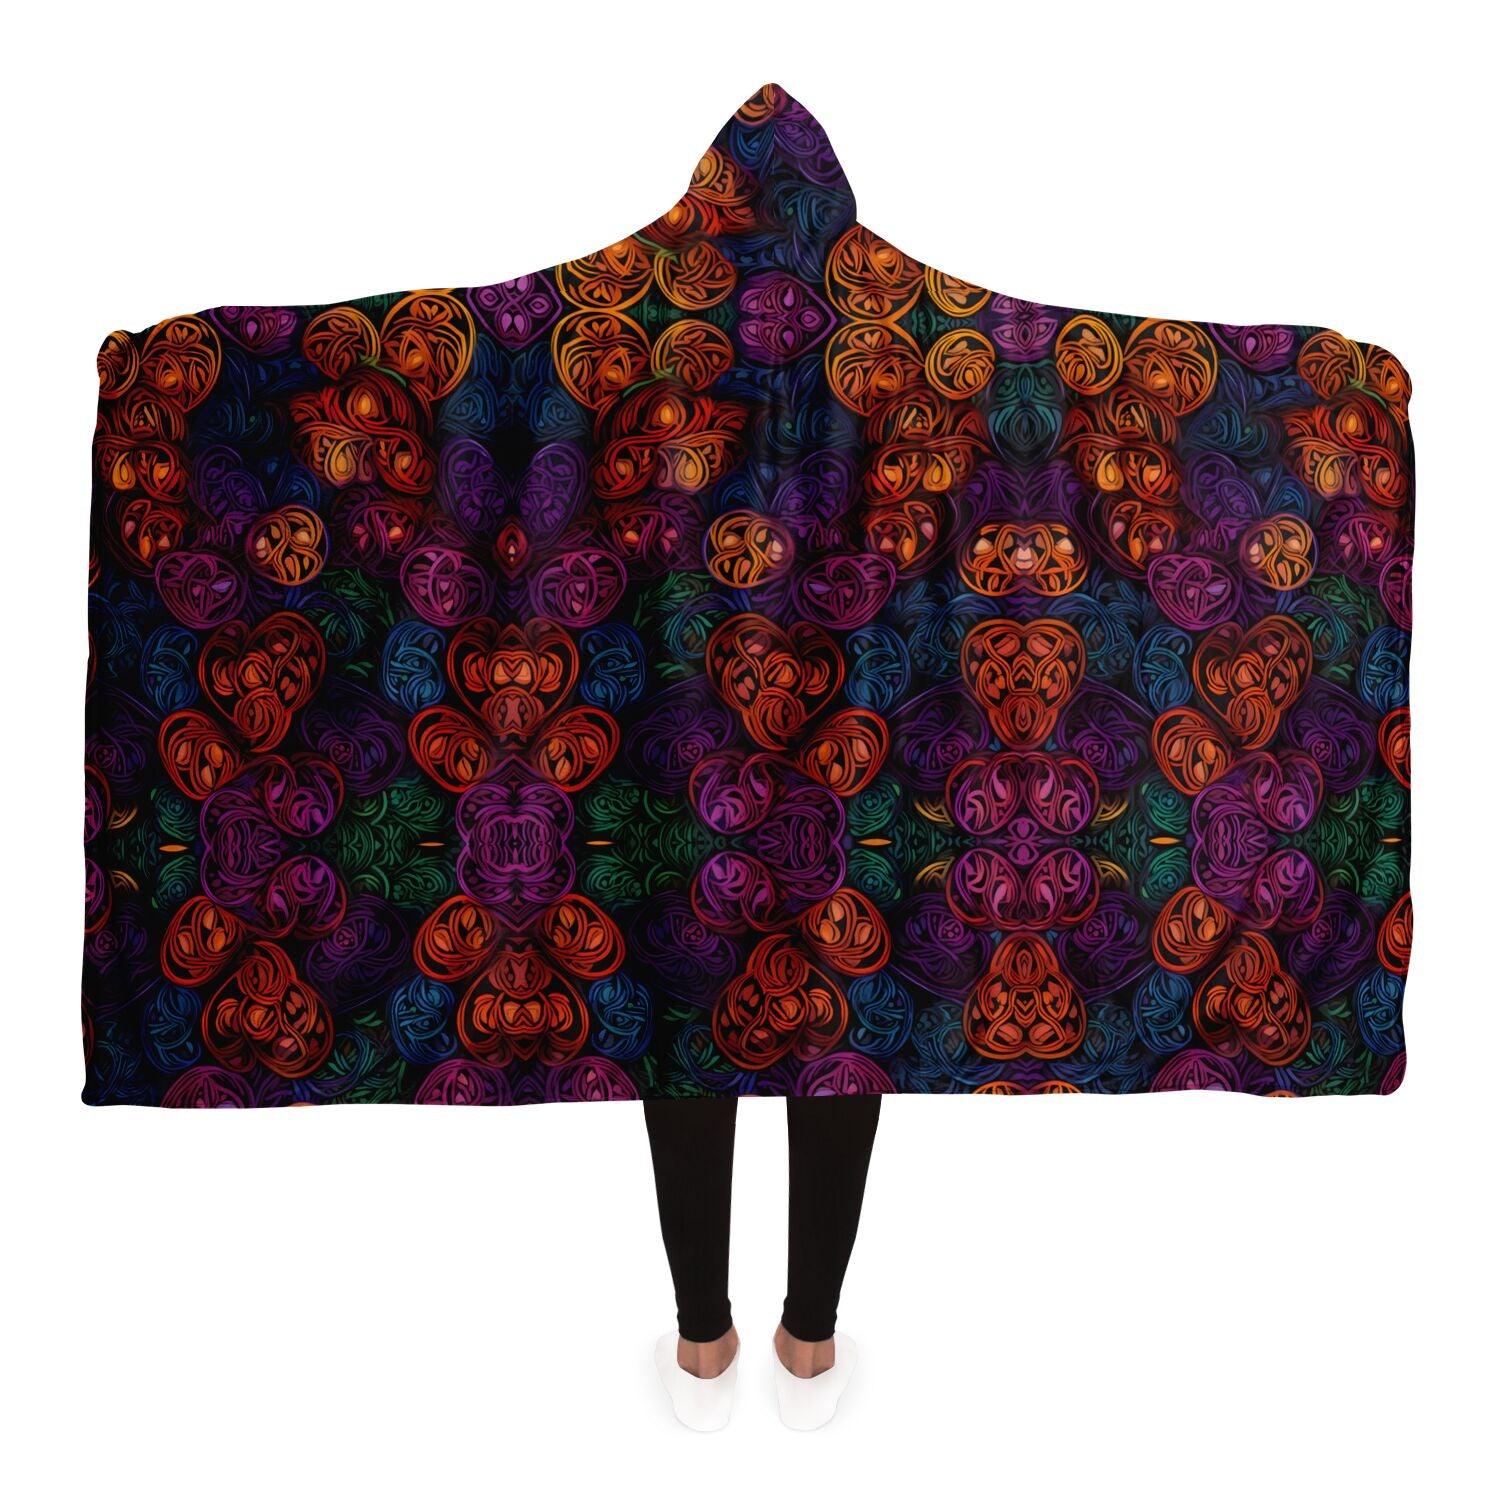 Intertwined Hearts Hooded Blanket - Vegan Handmade Quilt, Meditation & Yoga Wrap, Blanket Hoodie, Sherpa or Fleece Lining Options - 4Lovebirds